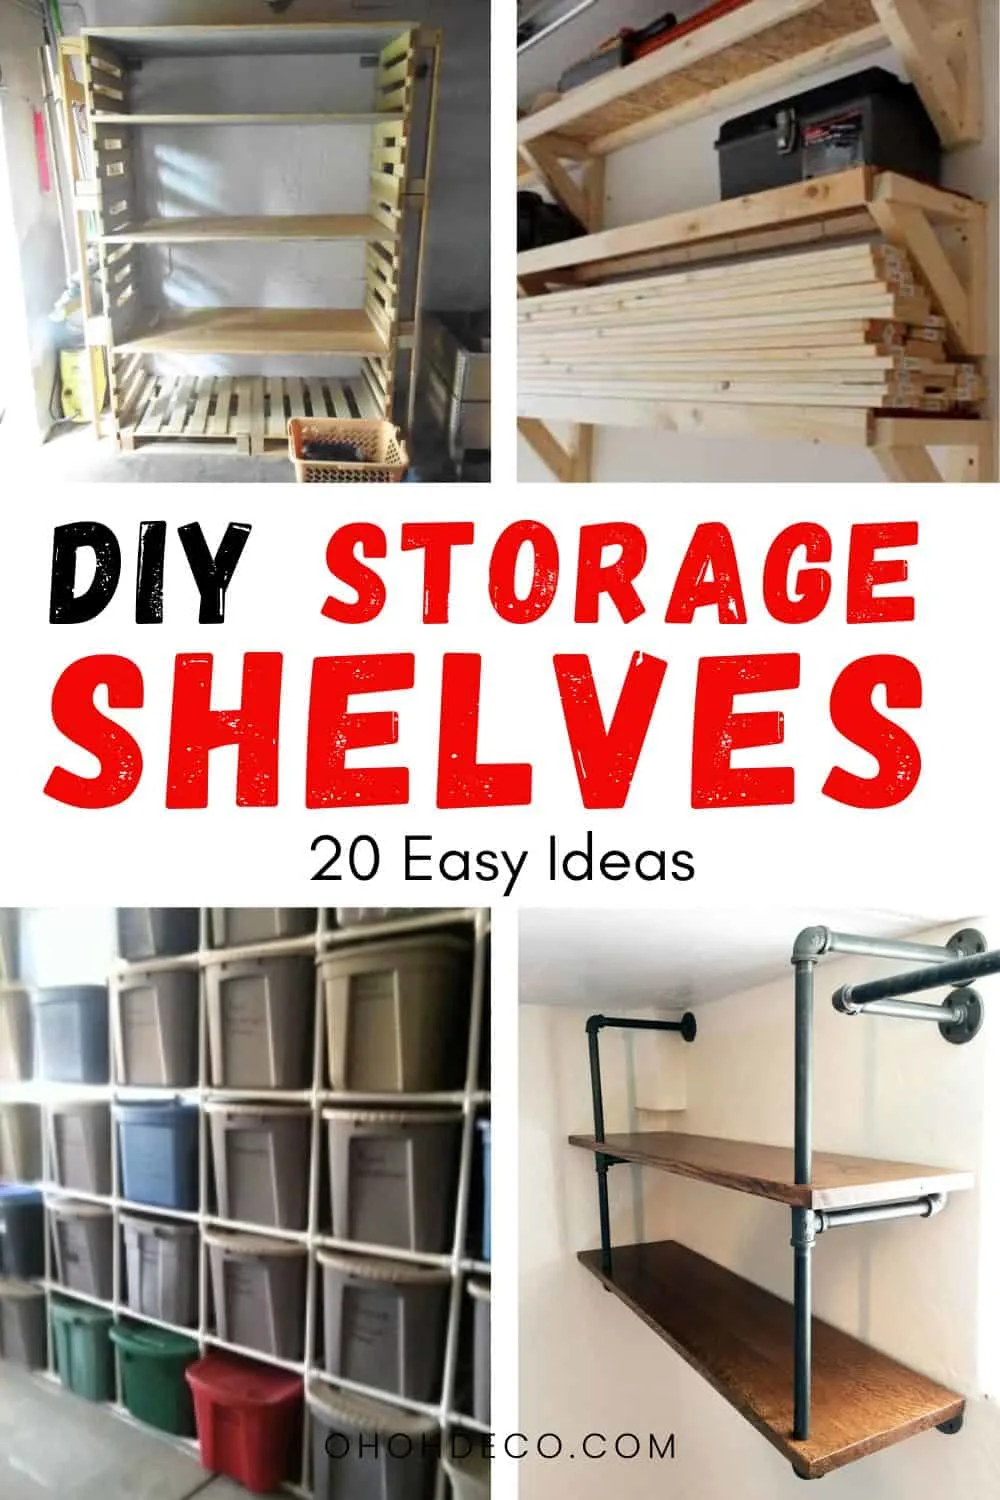 DIY storage shelves 20 easy ideas